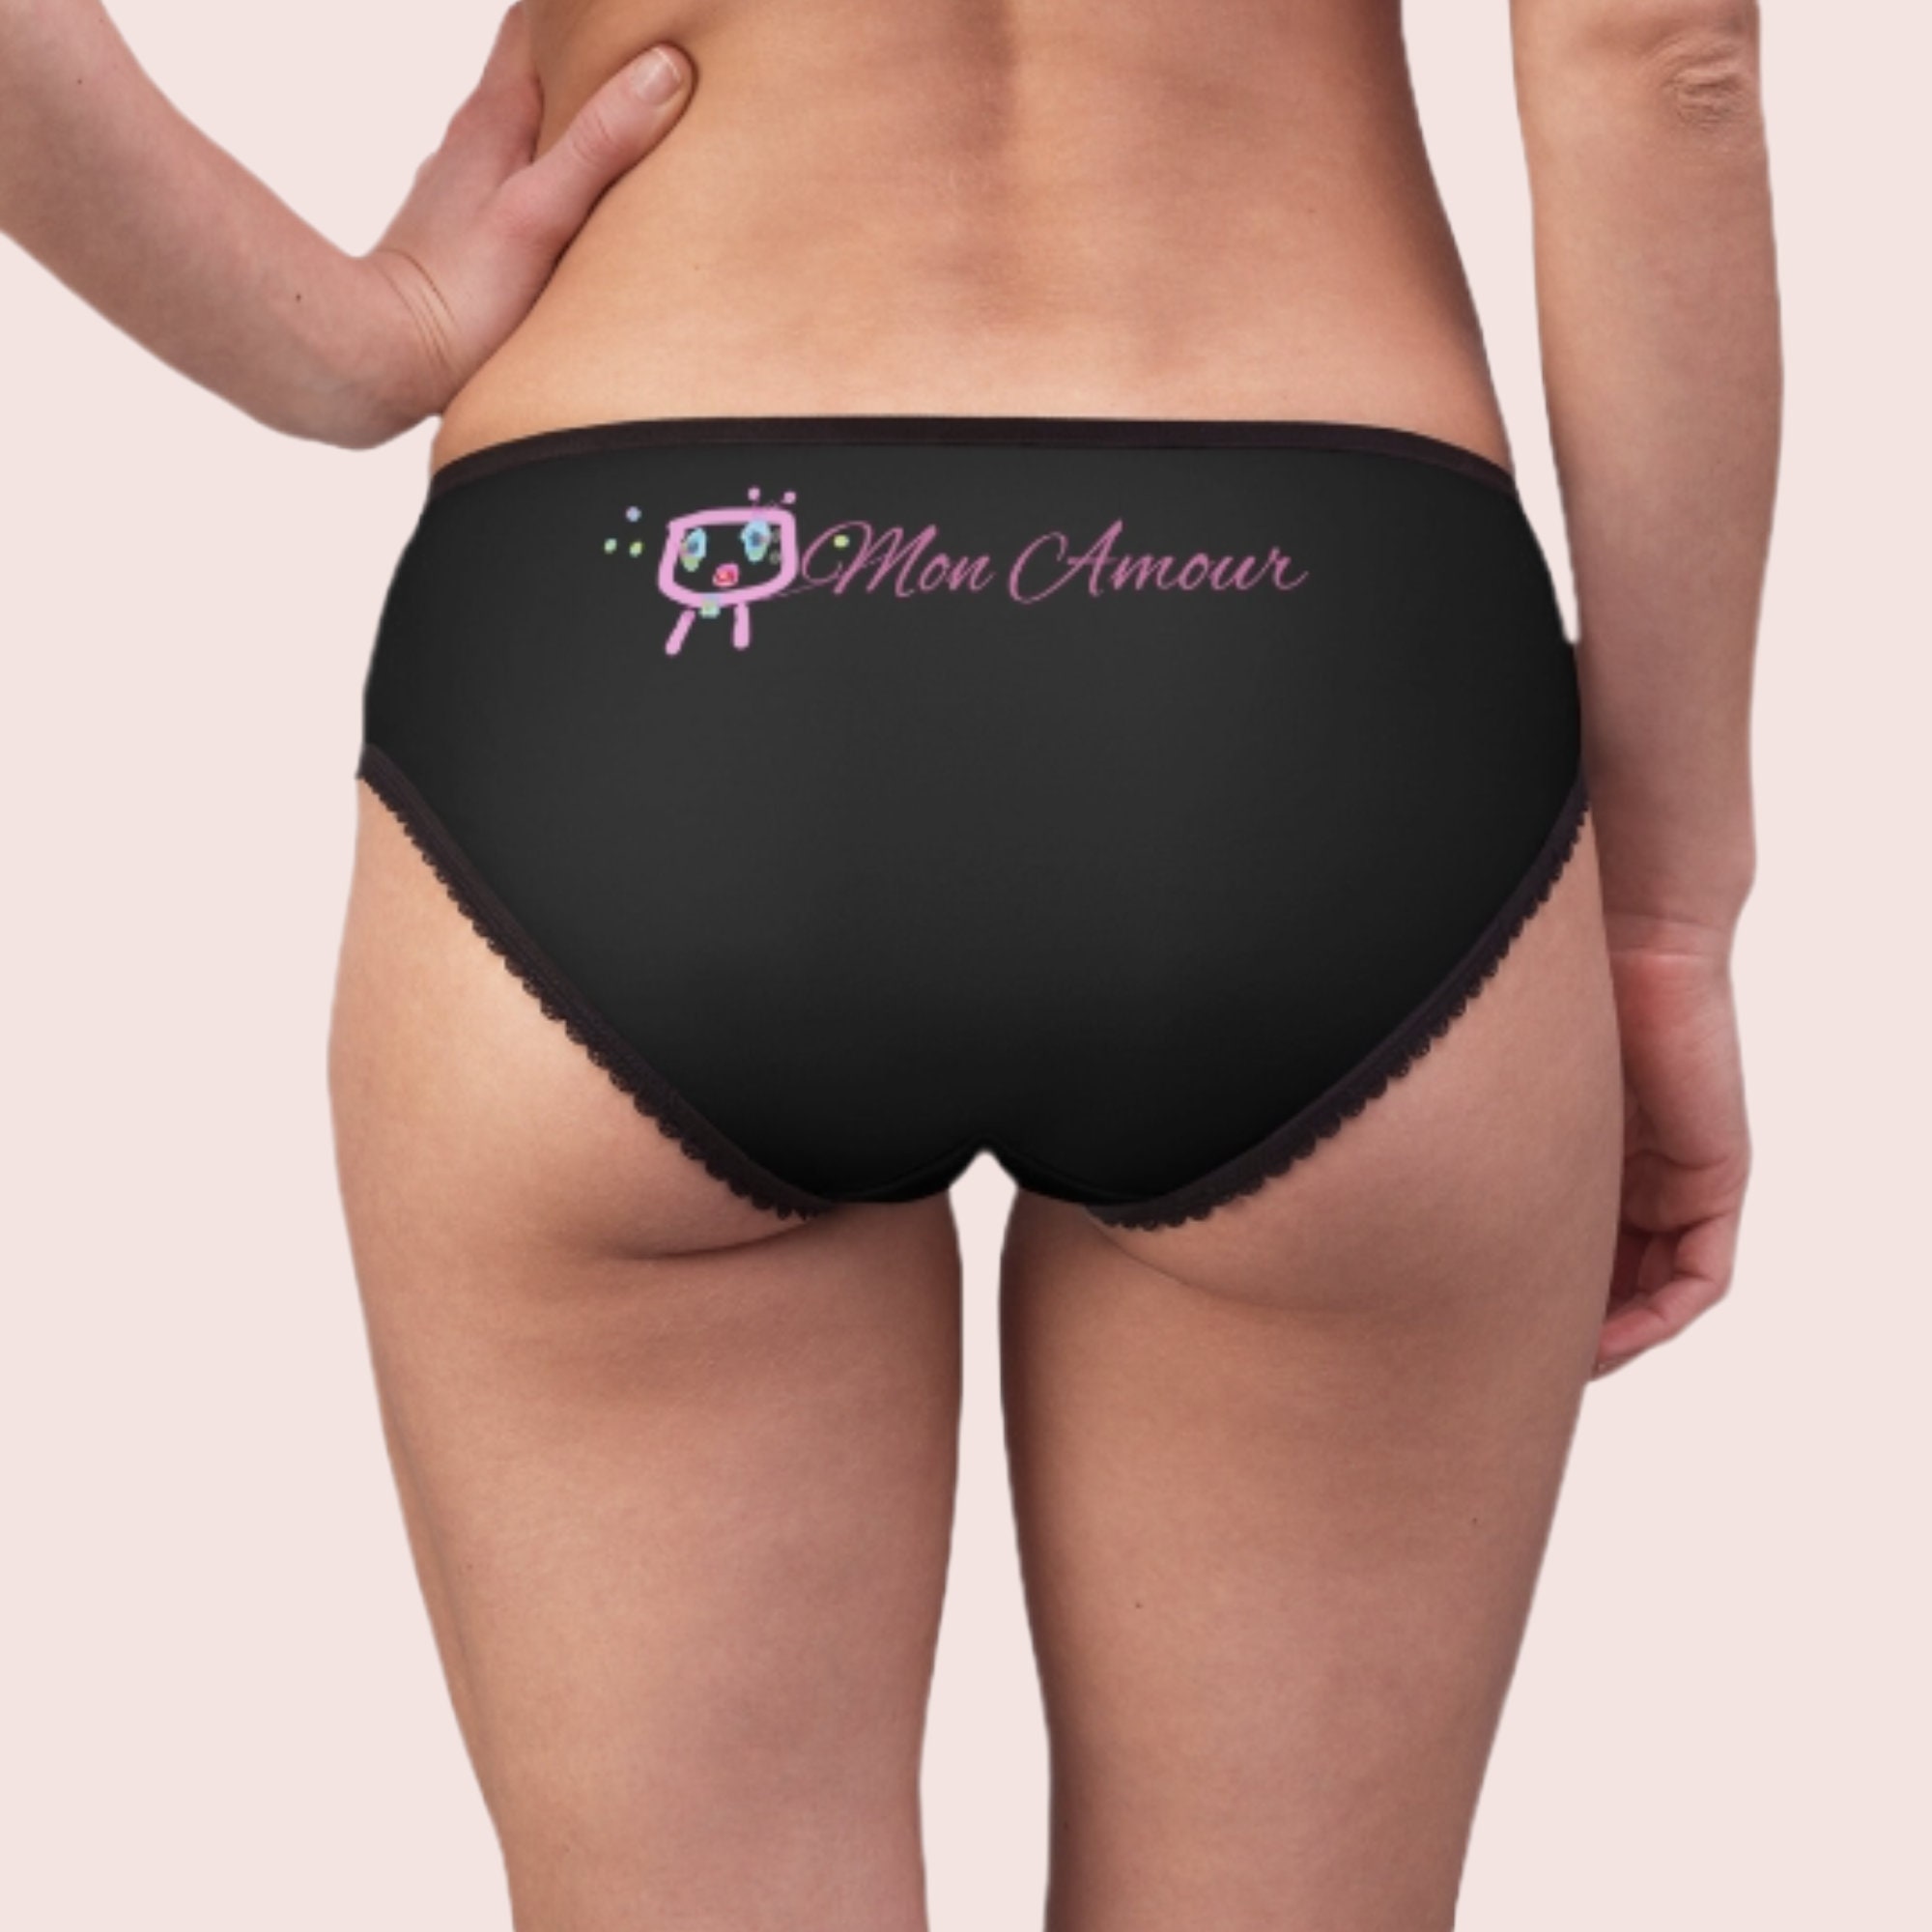 Women's Black Underwear with custom Brand detail in pink, Personalized  Women's panty - Customizable and Stylish Underwear, Women's panty